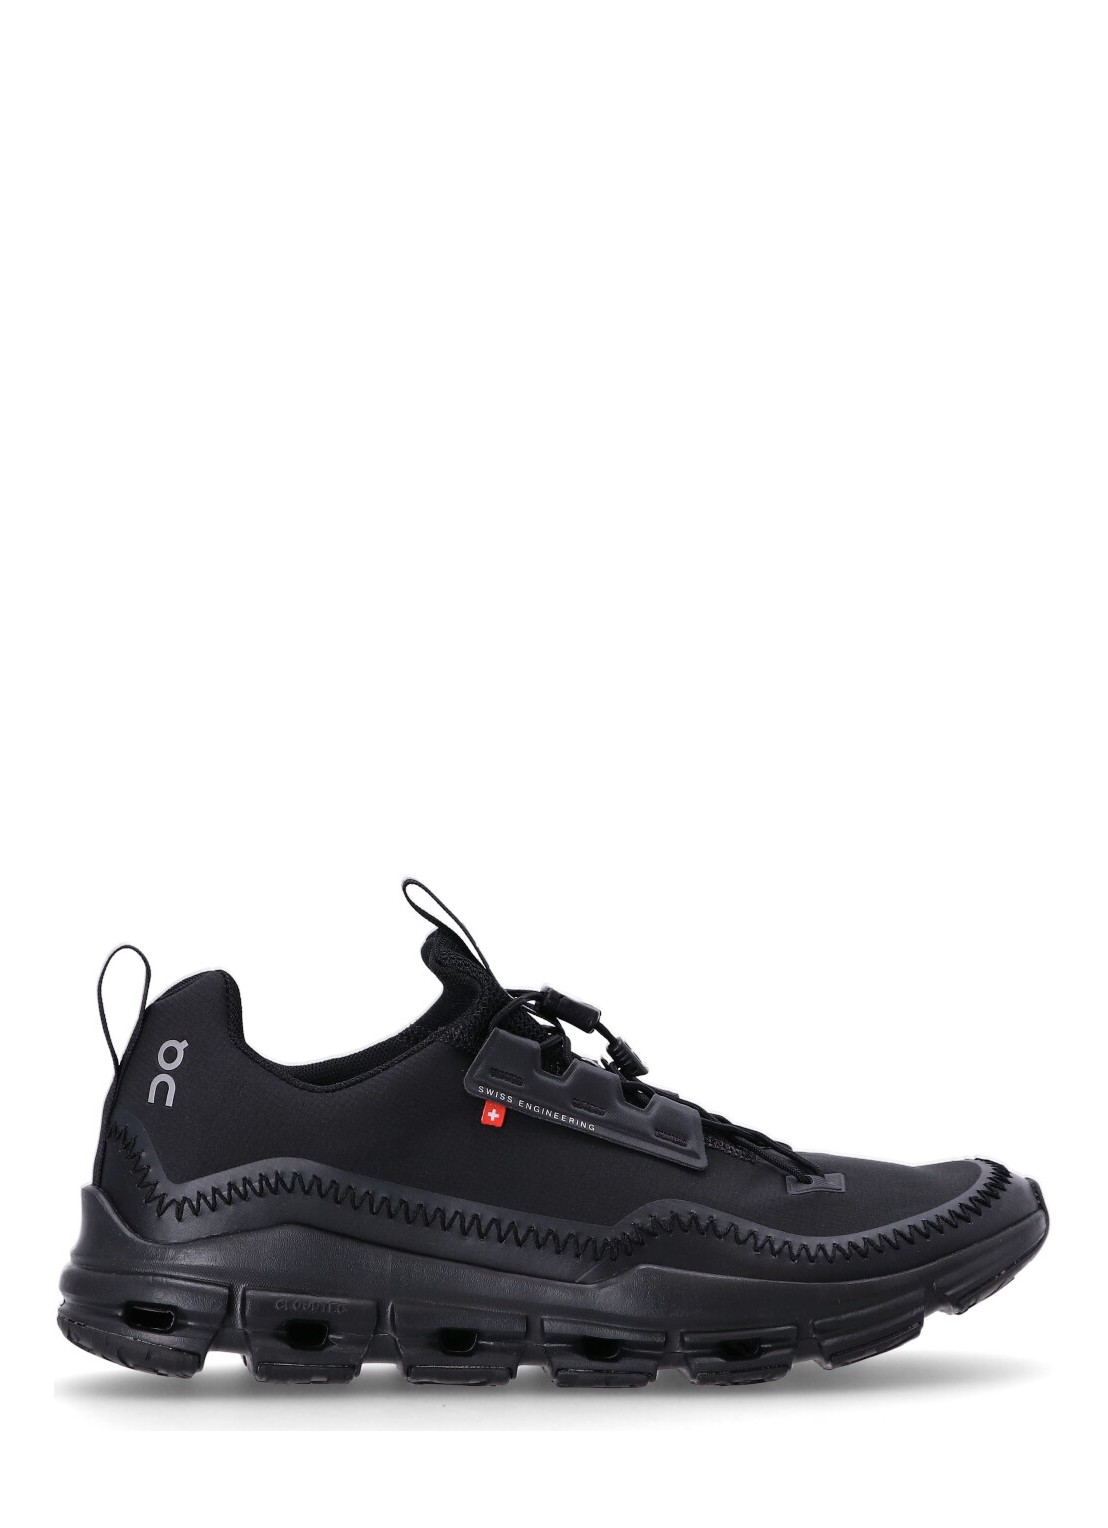 Sneaker on running sneaker man cloudaway 3md30450485 all black talla 42.5
 